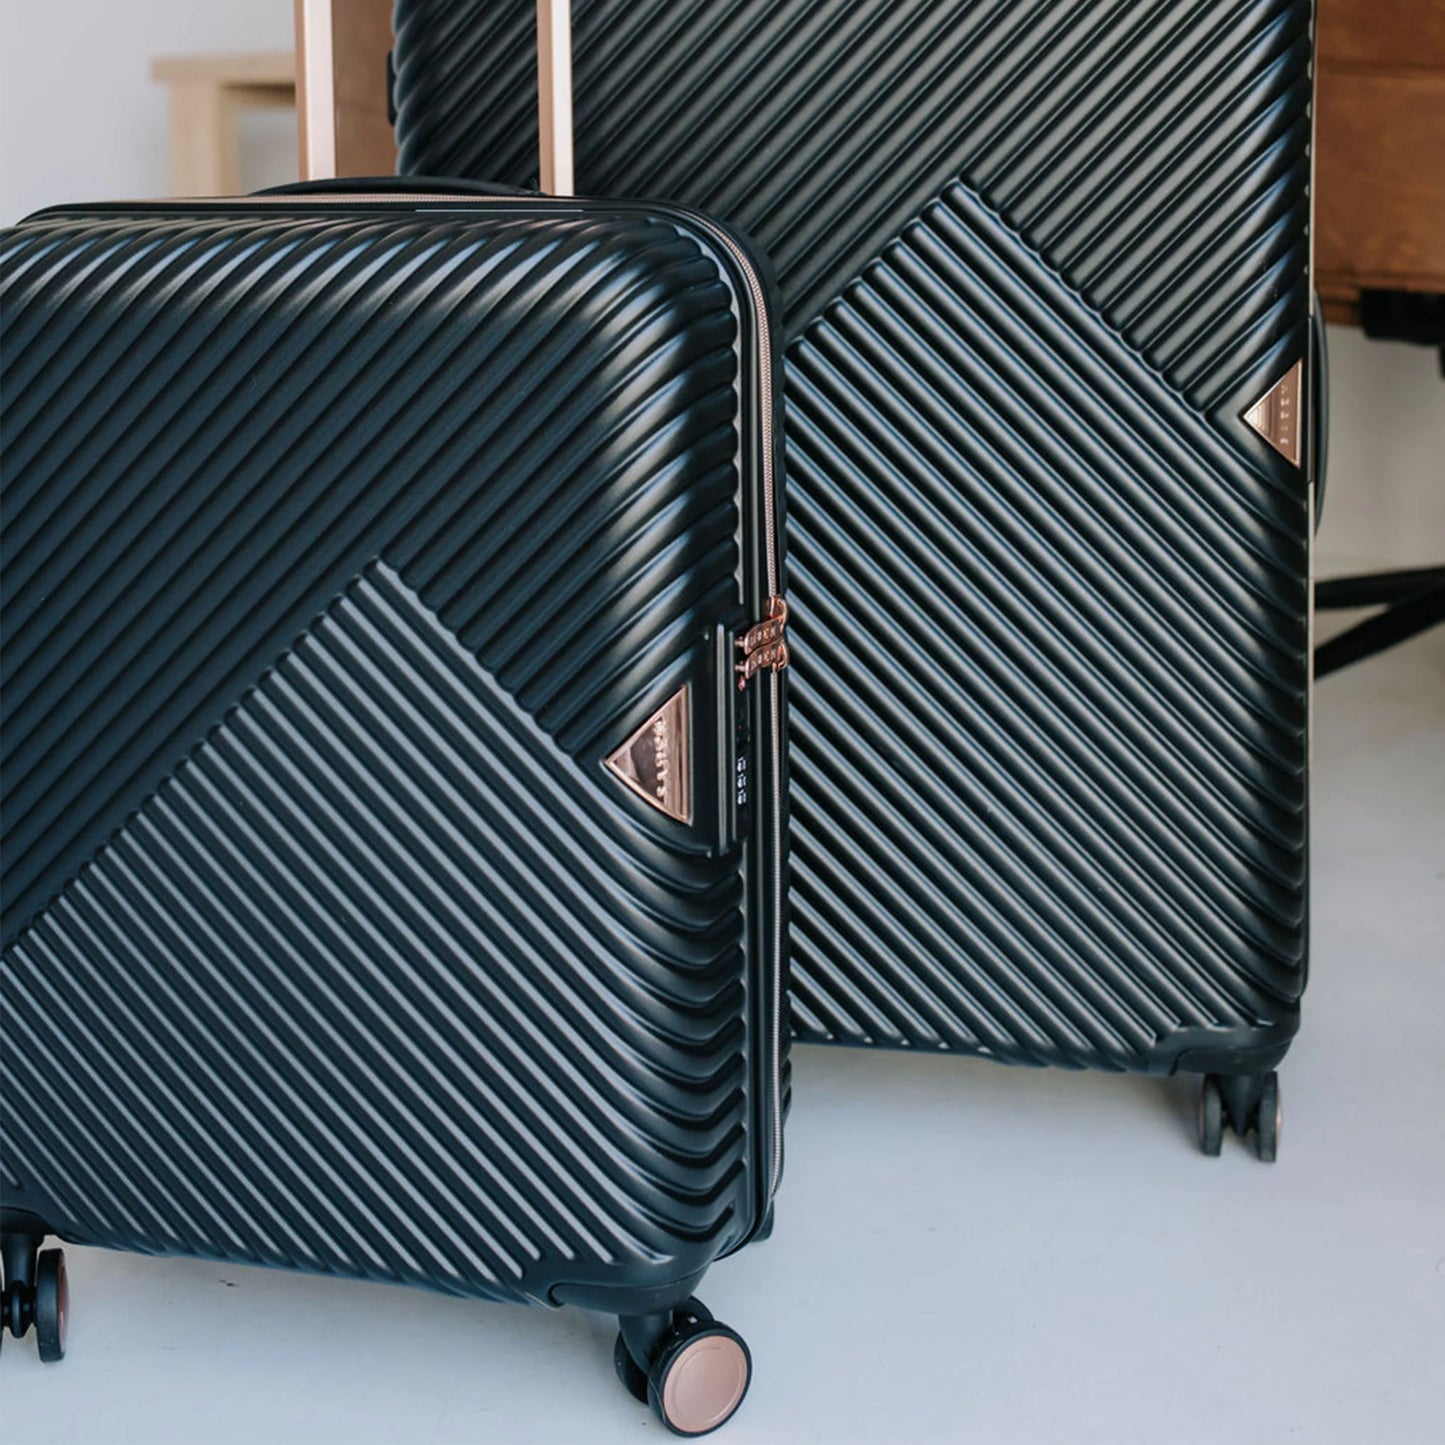 SABEN // Suitcase Medium BLACK/ROSEGOLD